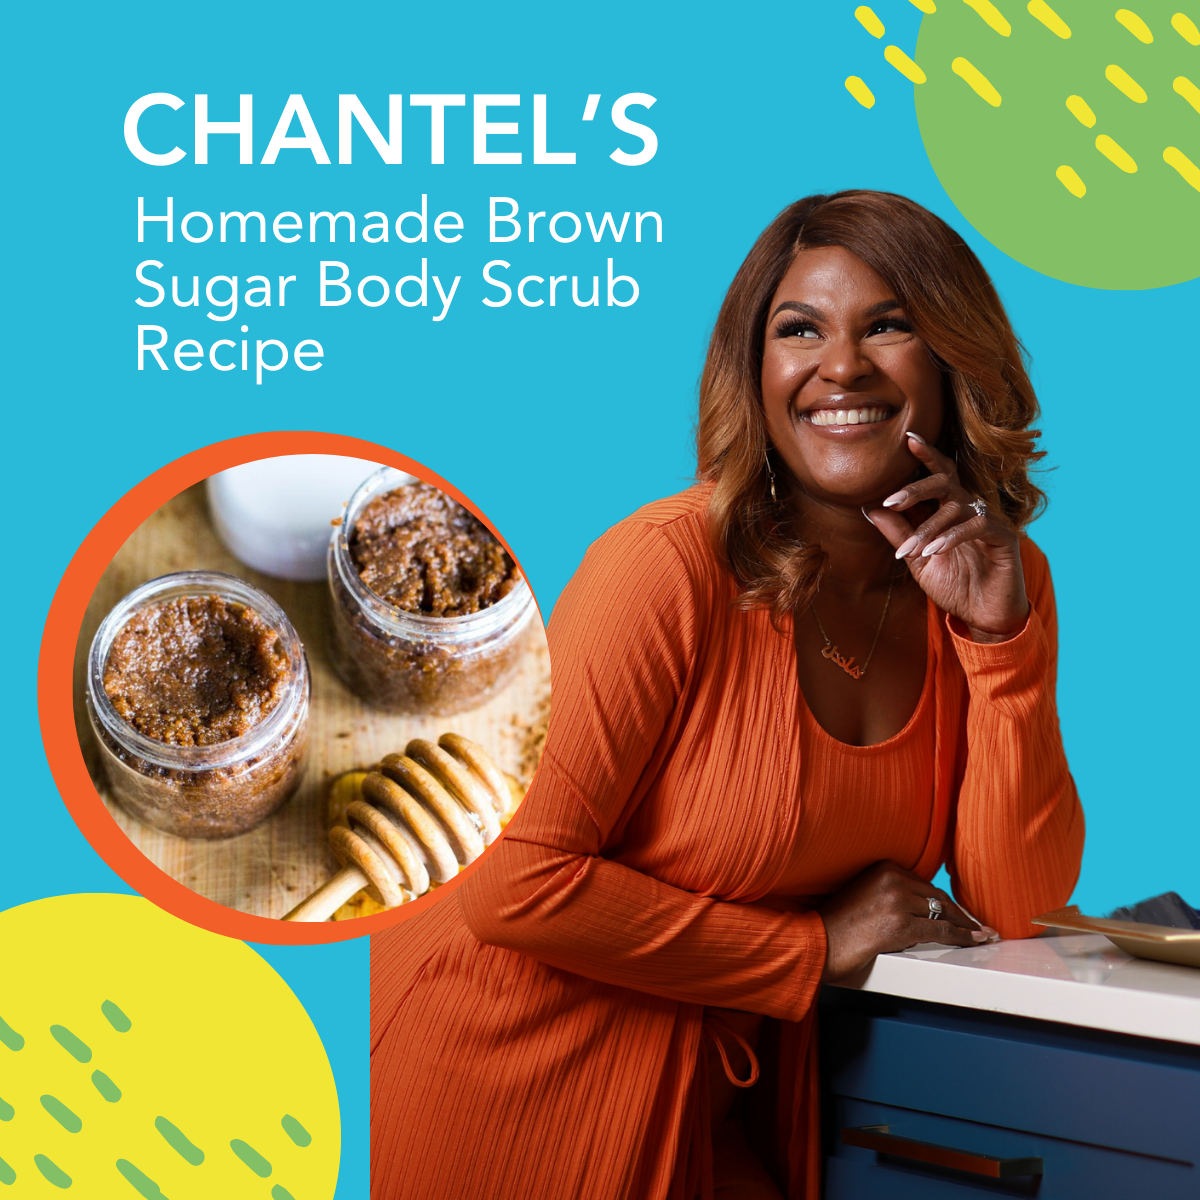 Chantel’s Homemade Brown Sugar Body Scrub Recipe